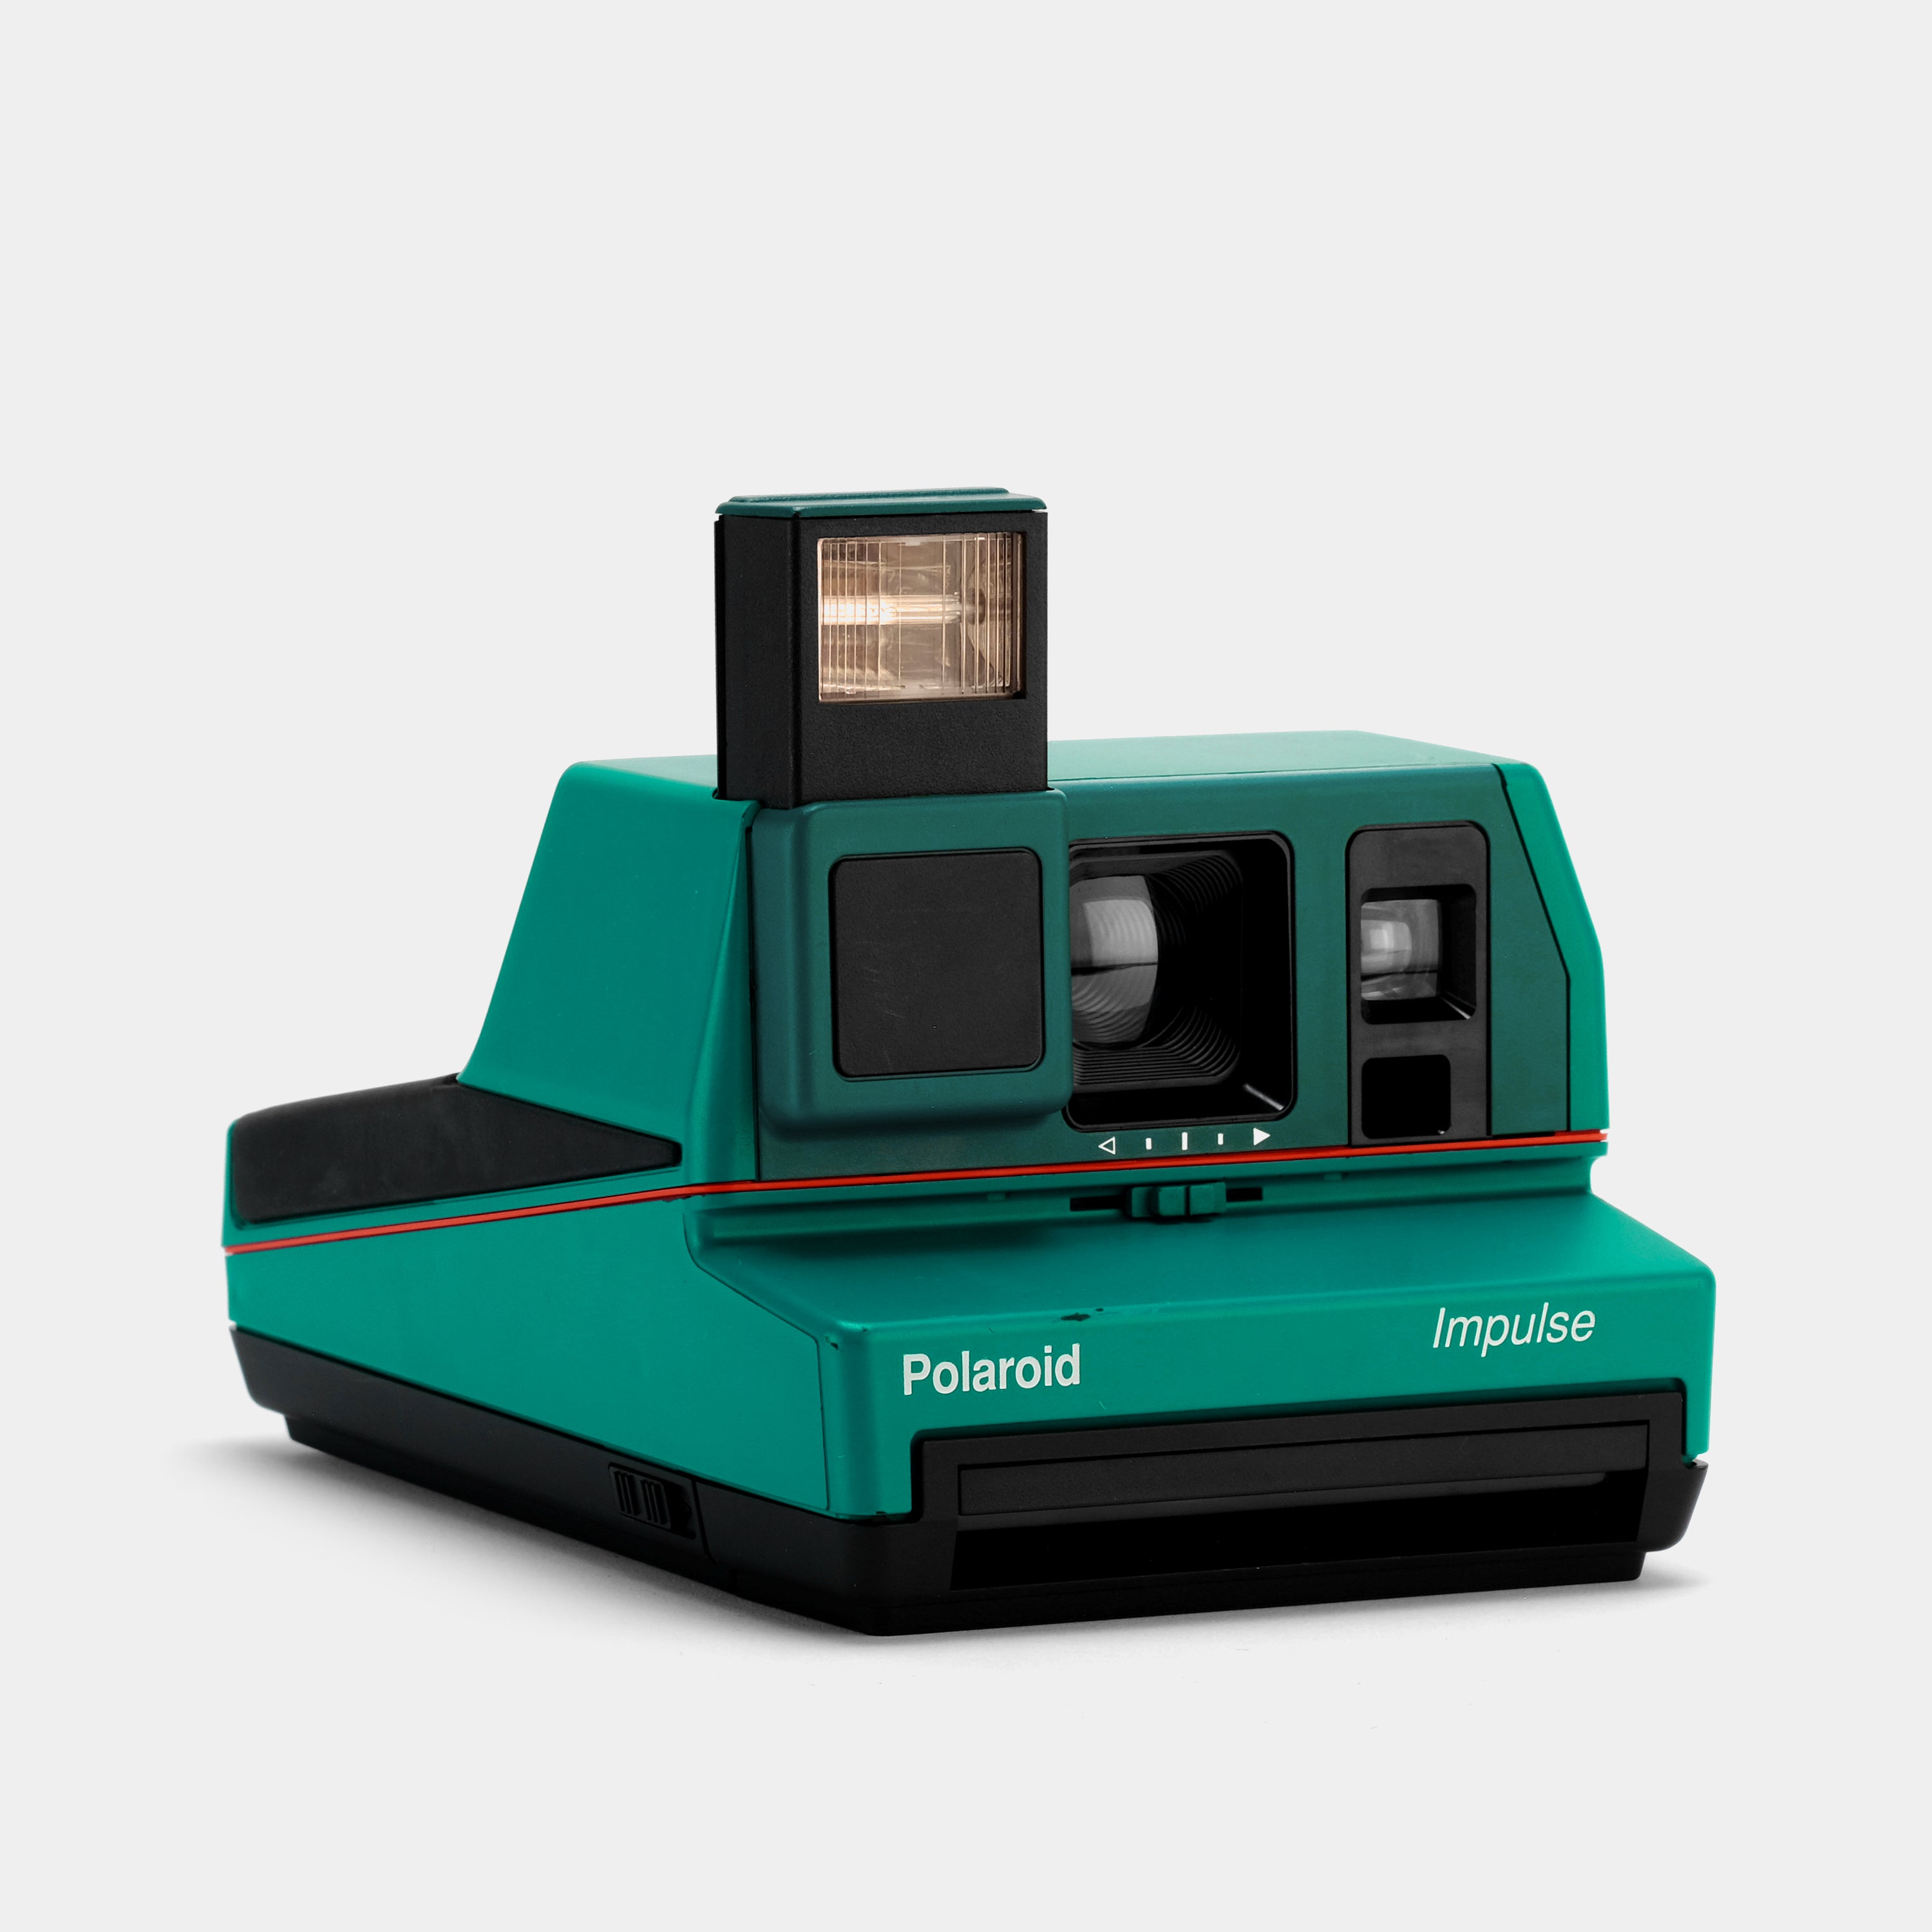 Polaroid 600 Impulse Jade Green Instant Film Camera (Prototype?)